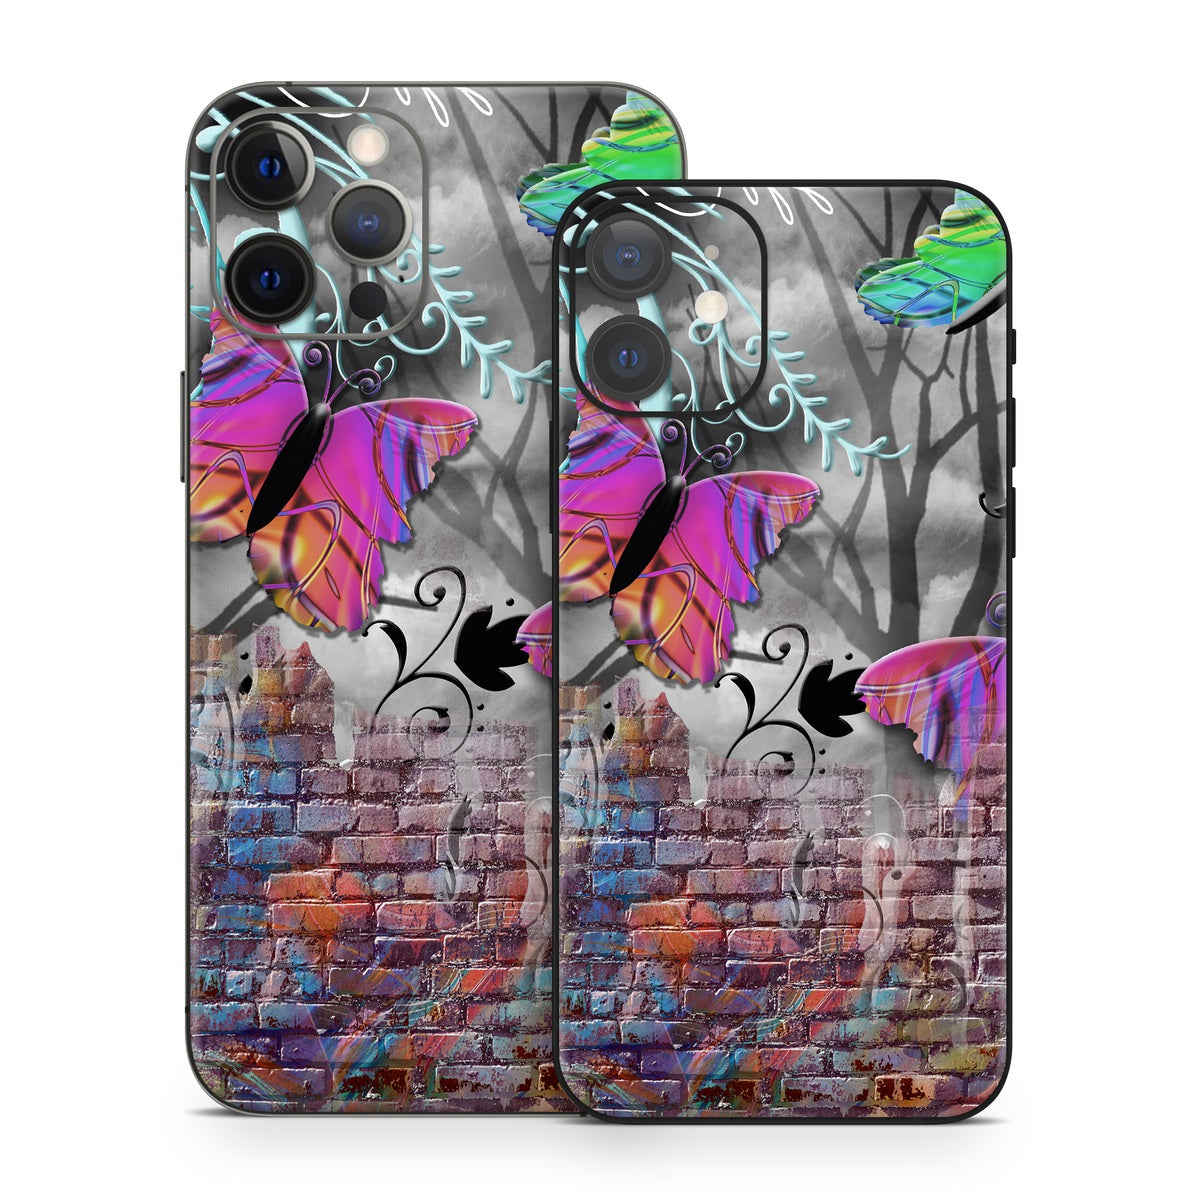 Butterfly Wall - Apple iPhone 12 Skin